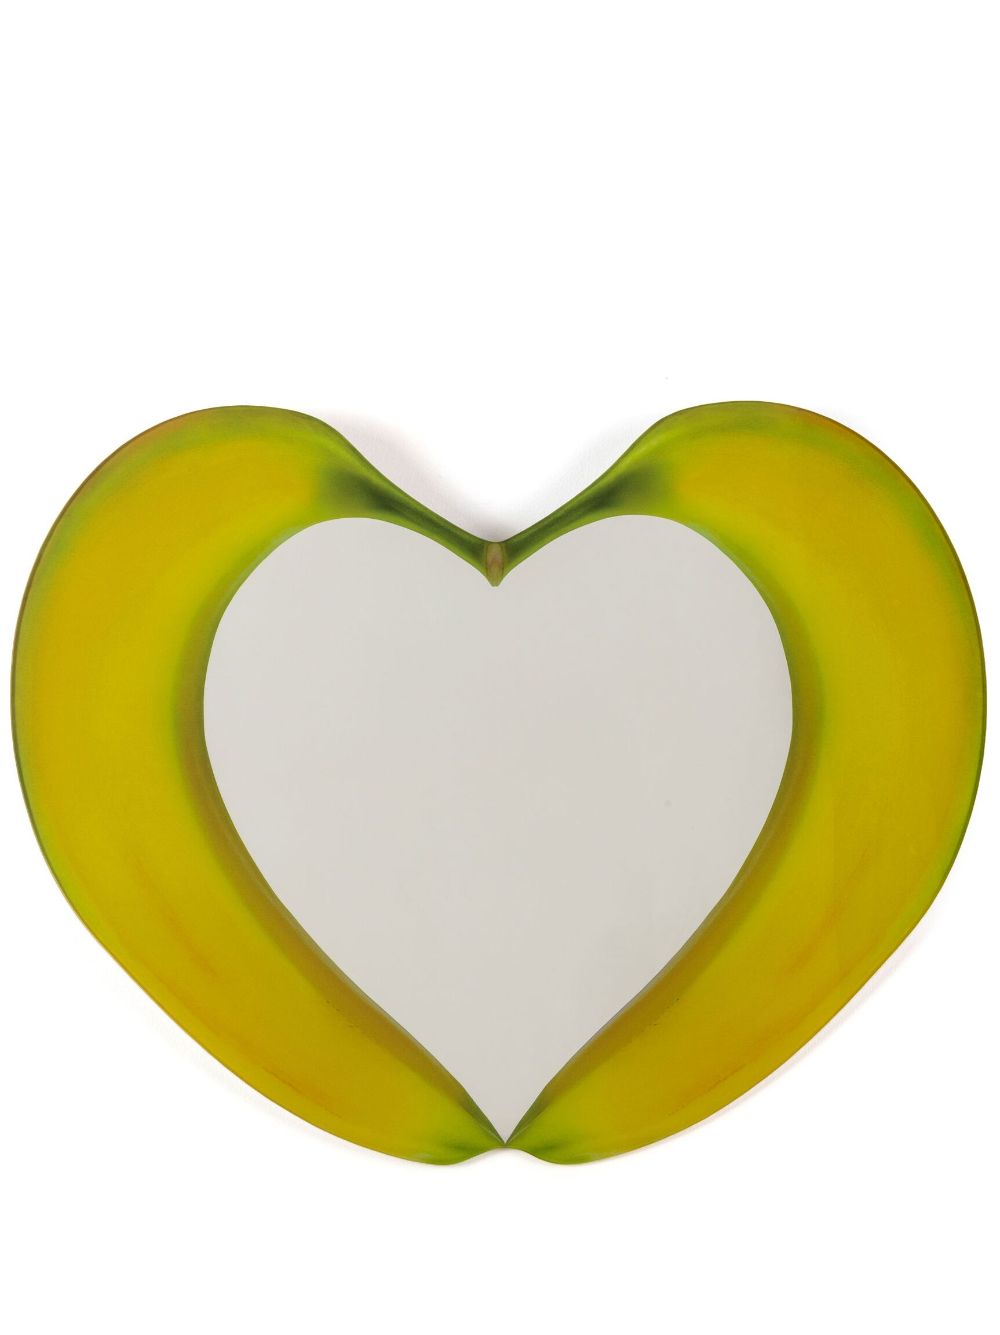 Seletti Love Banana mirror - Yellow von Seletti